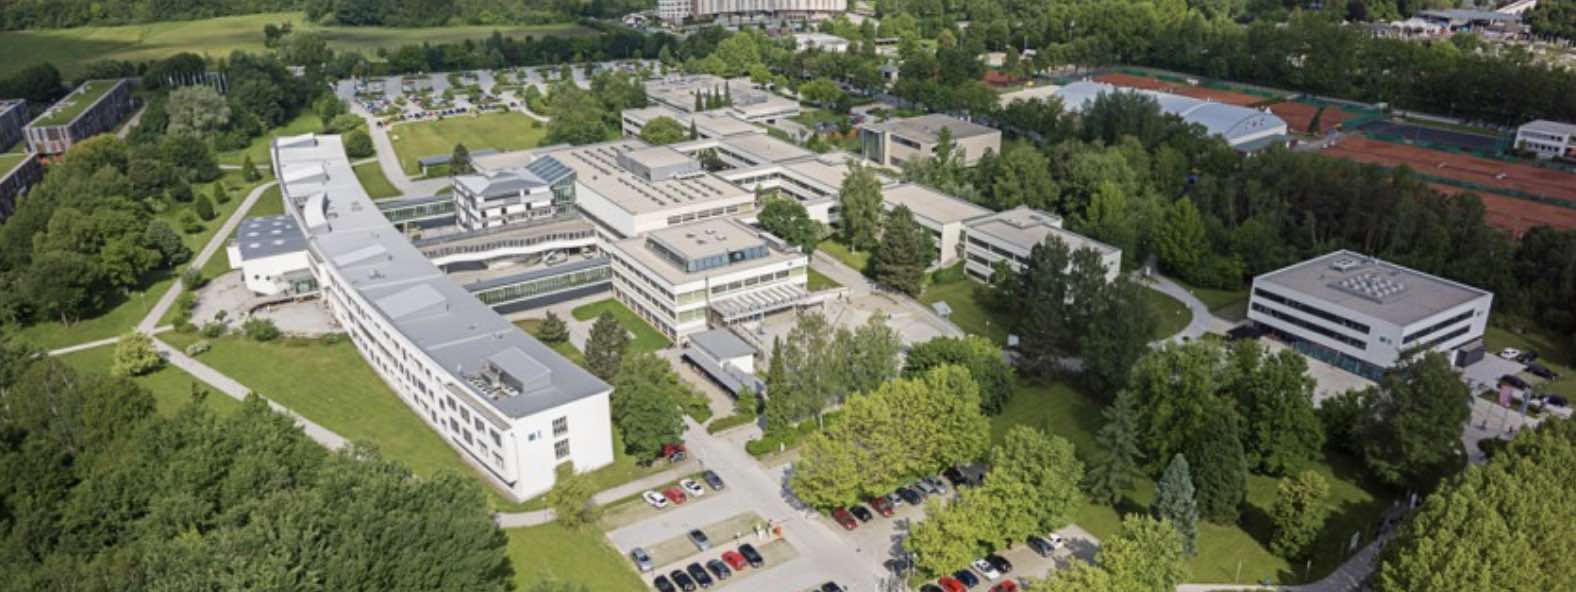 Клагенфуртский университет. Источник фото: www.aau.at